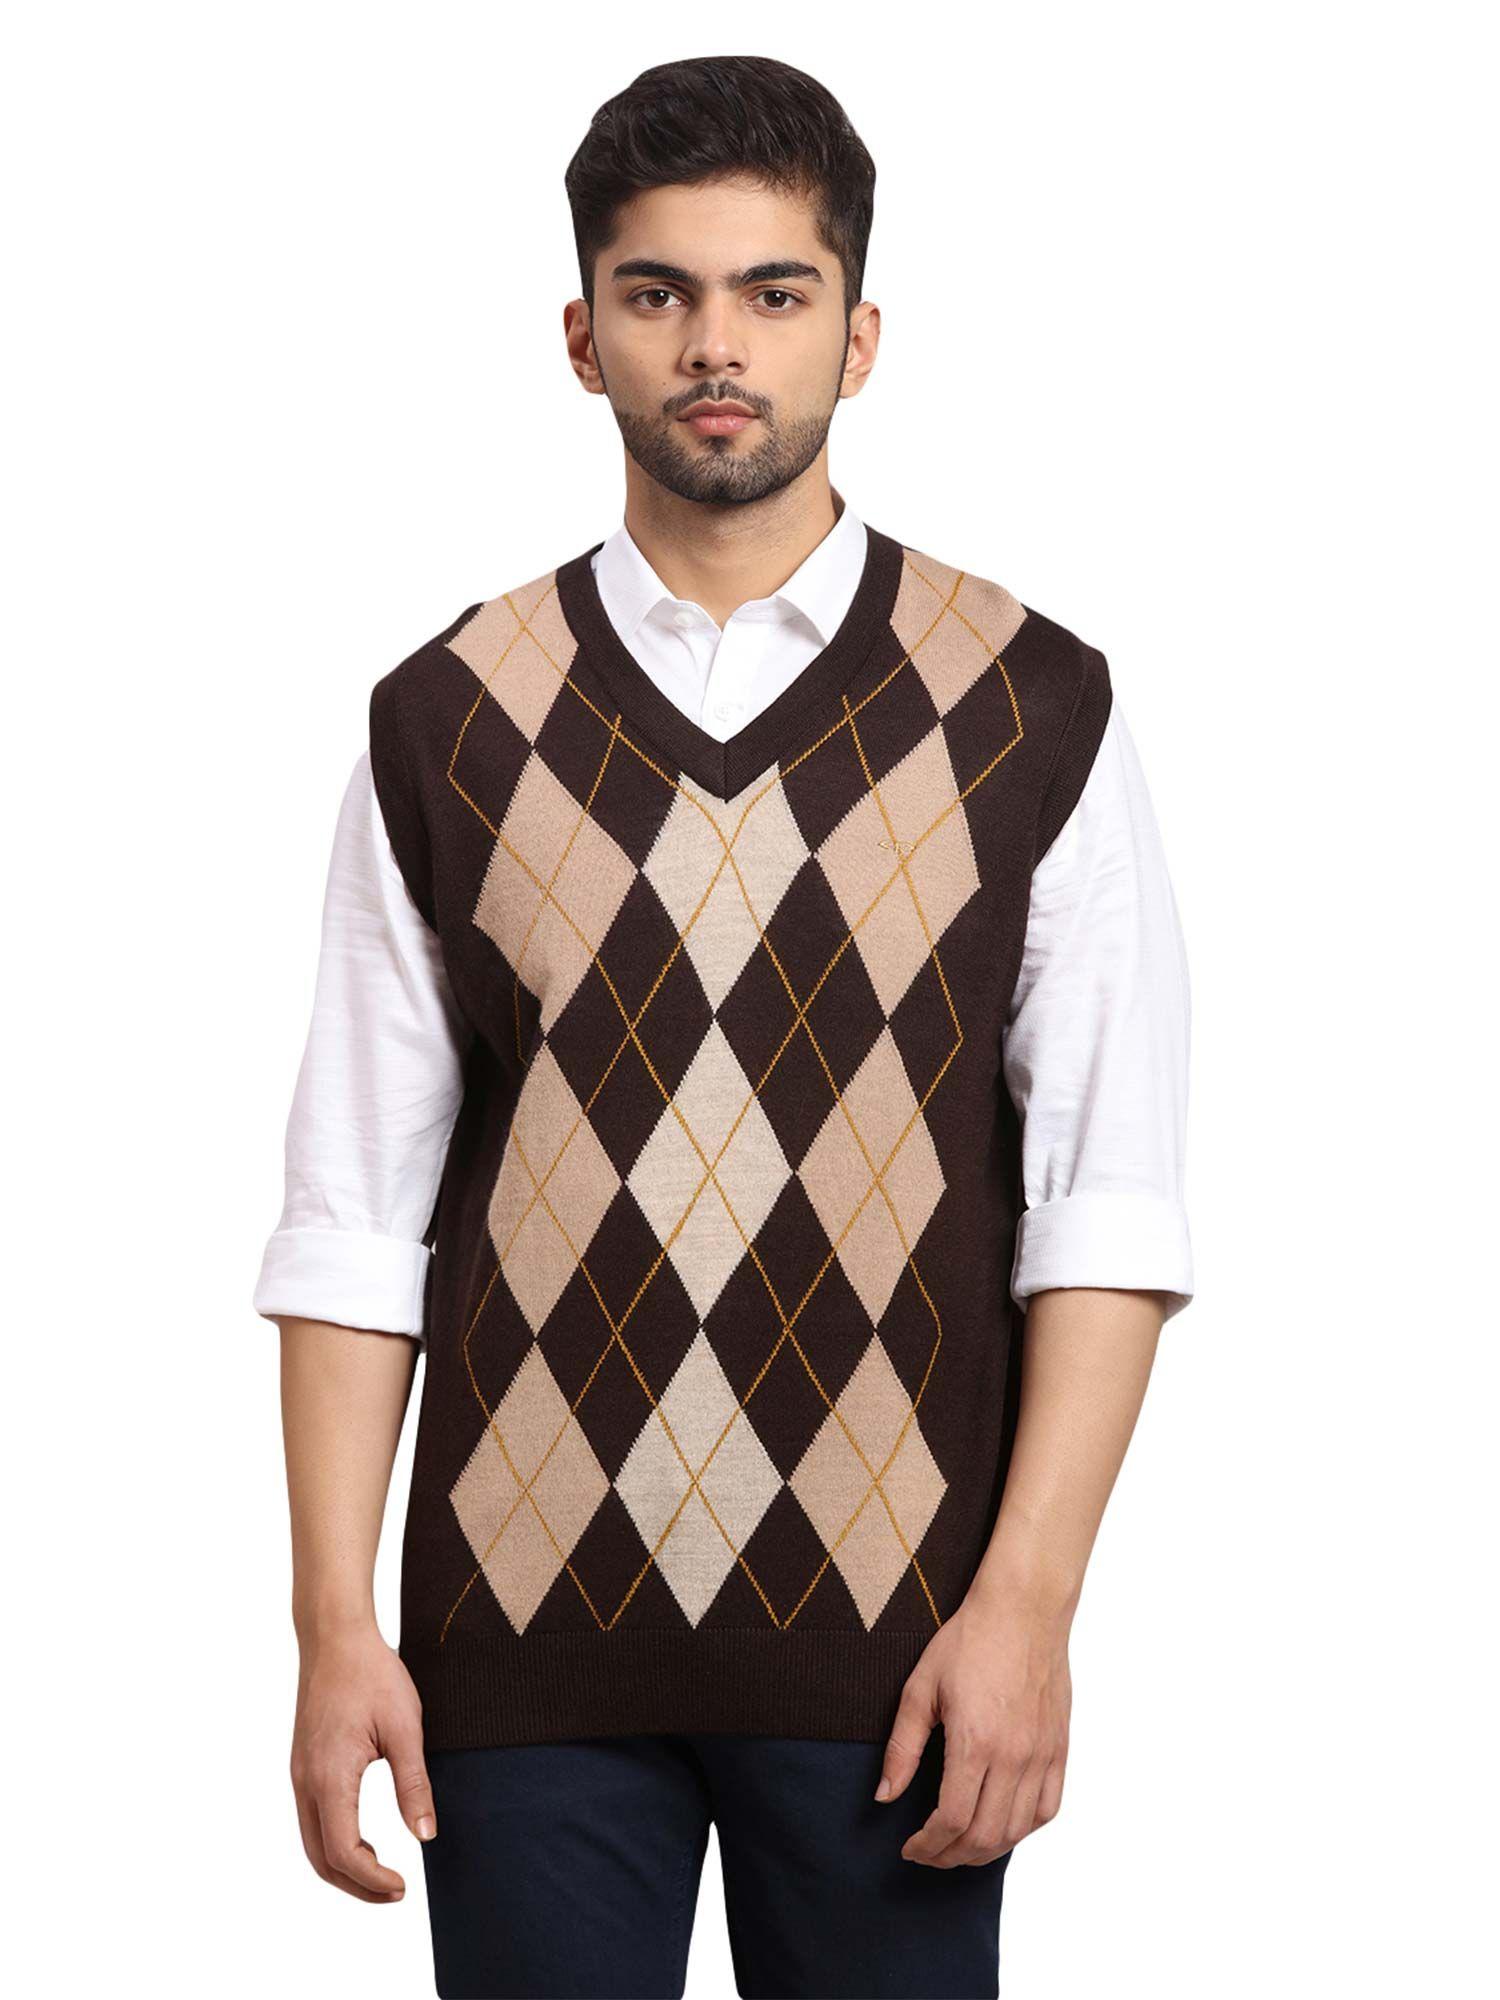 medium brown sweater